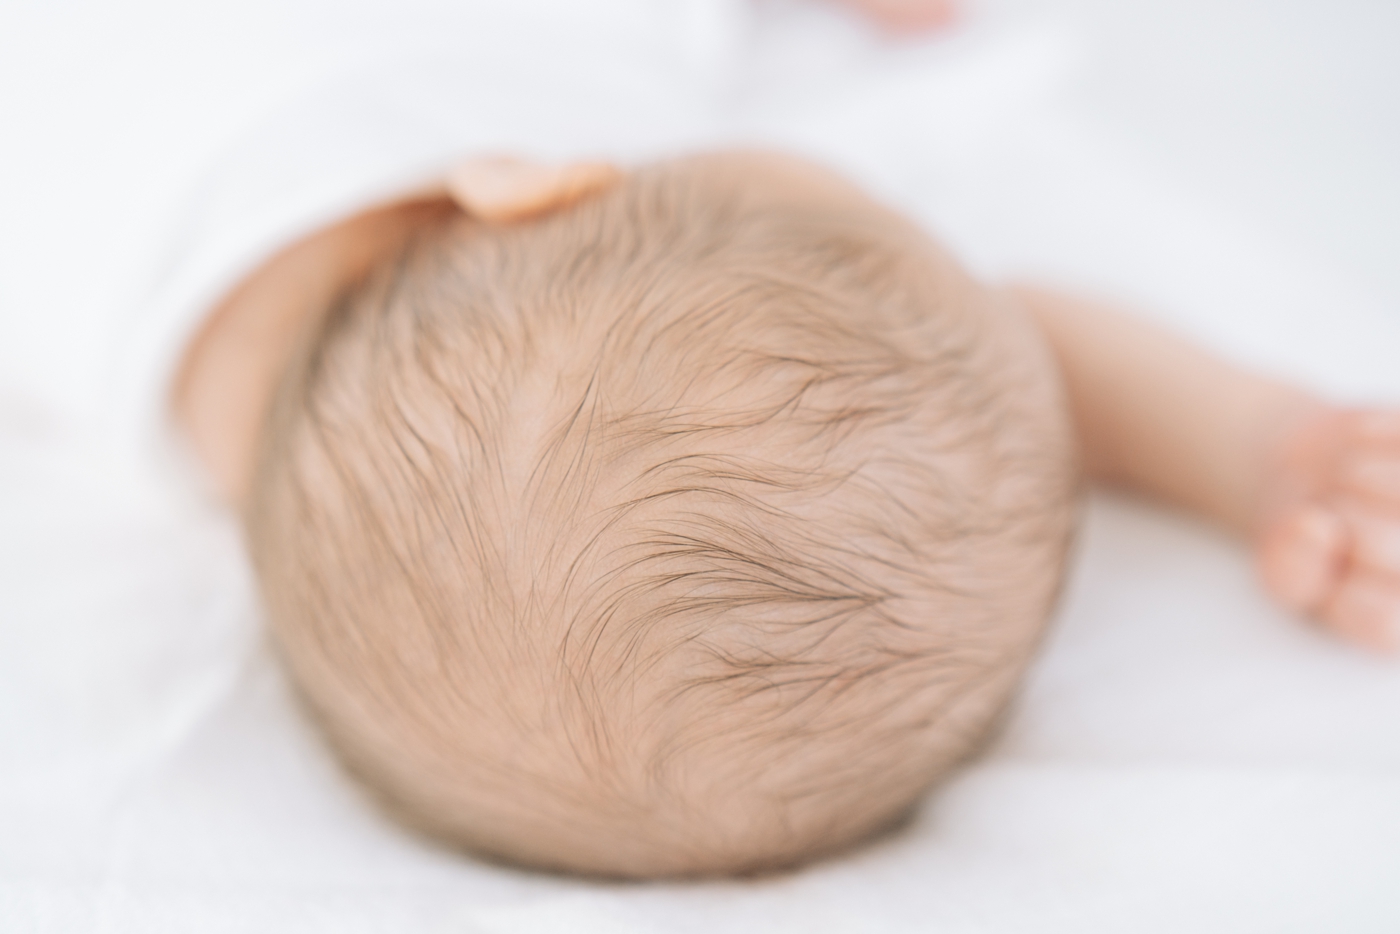 Newborn detail image of baby's hair. Photo by Lauren Sosler Photography.